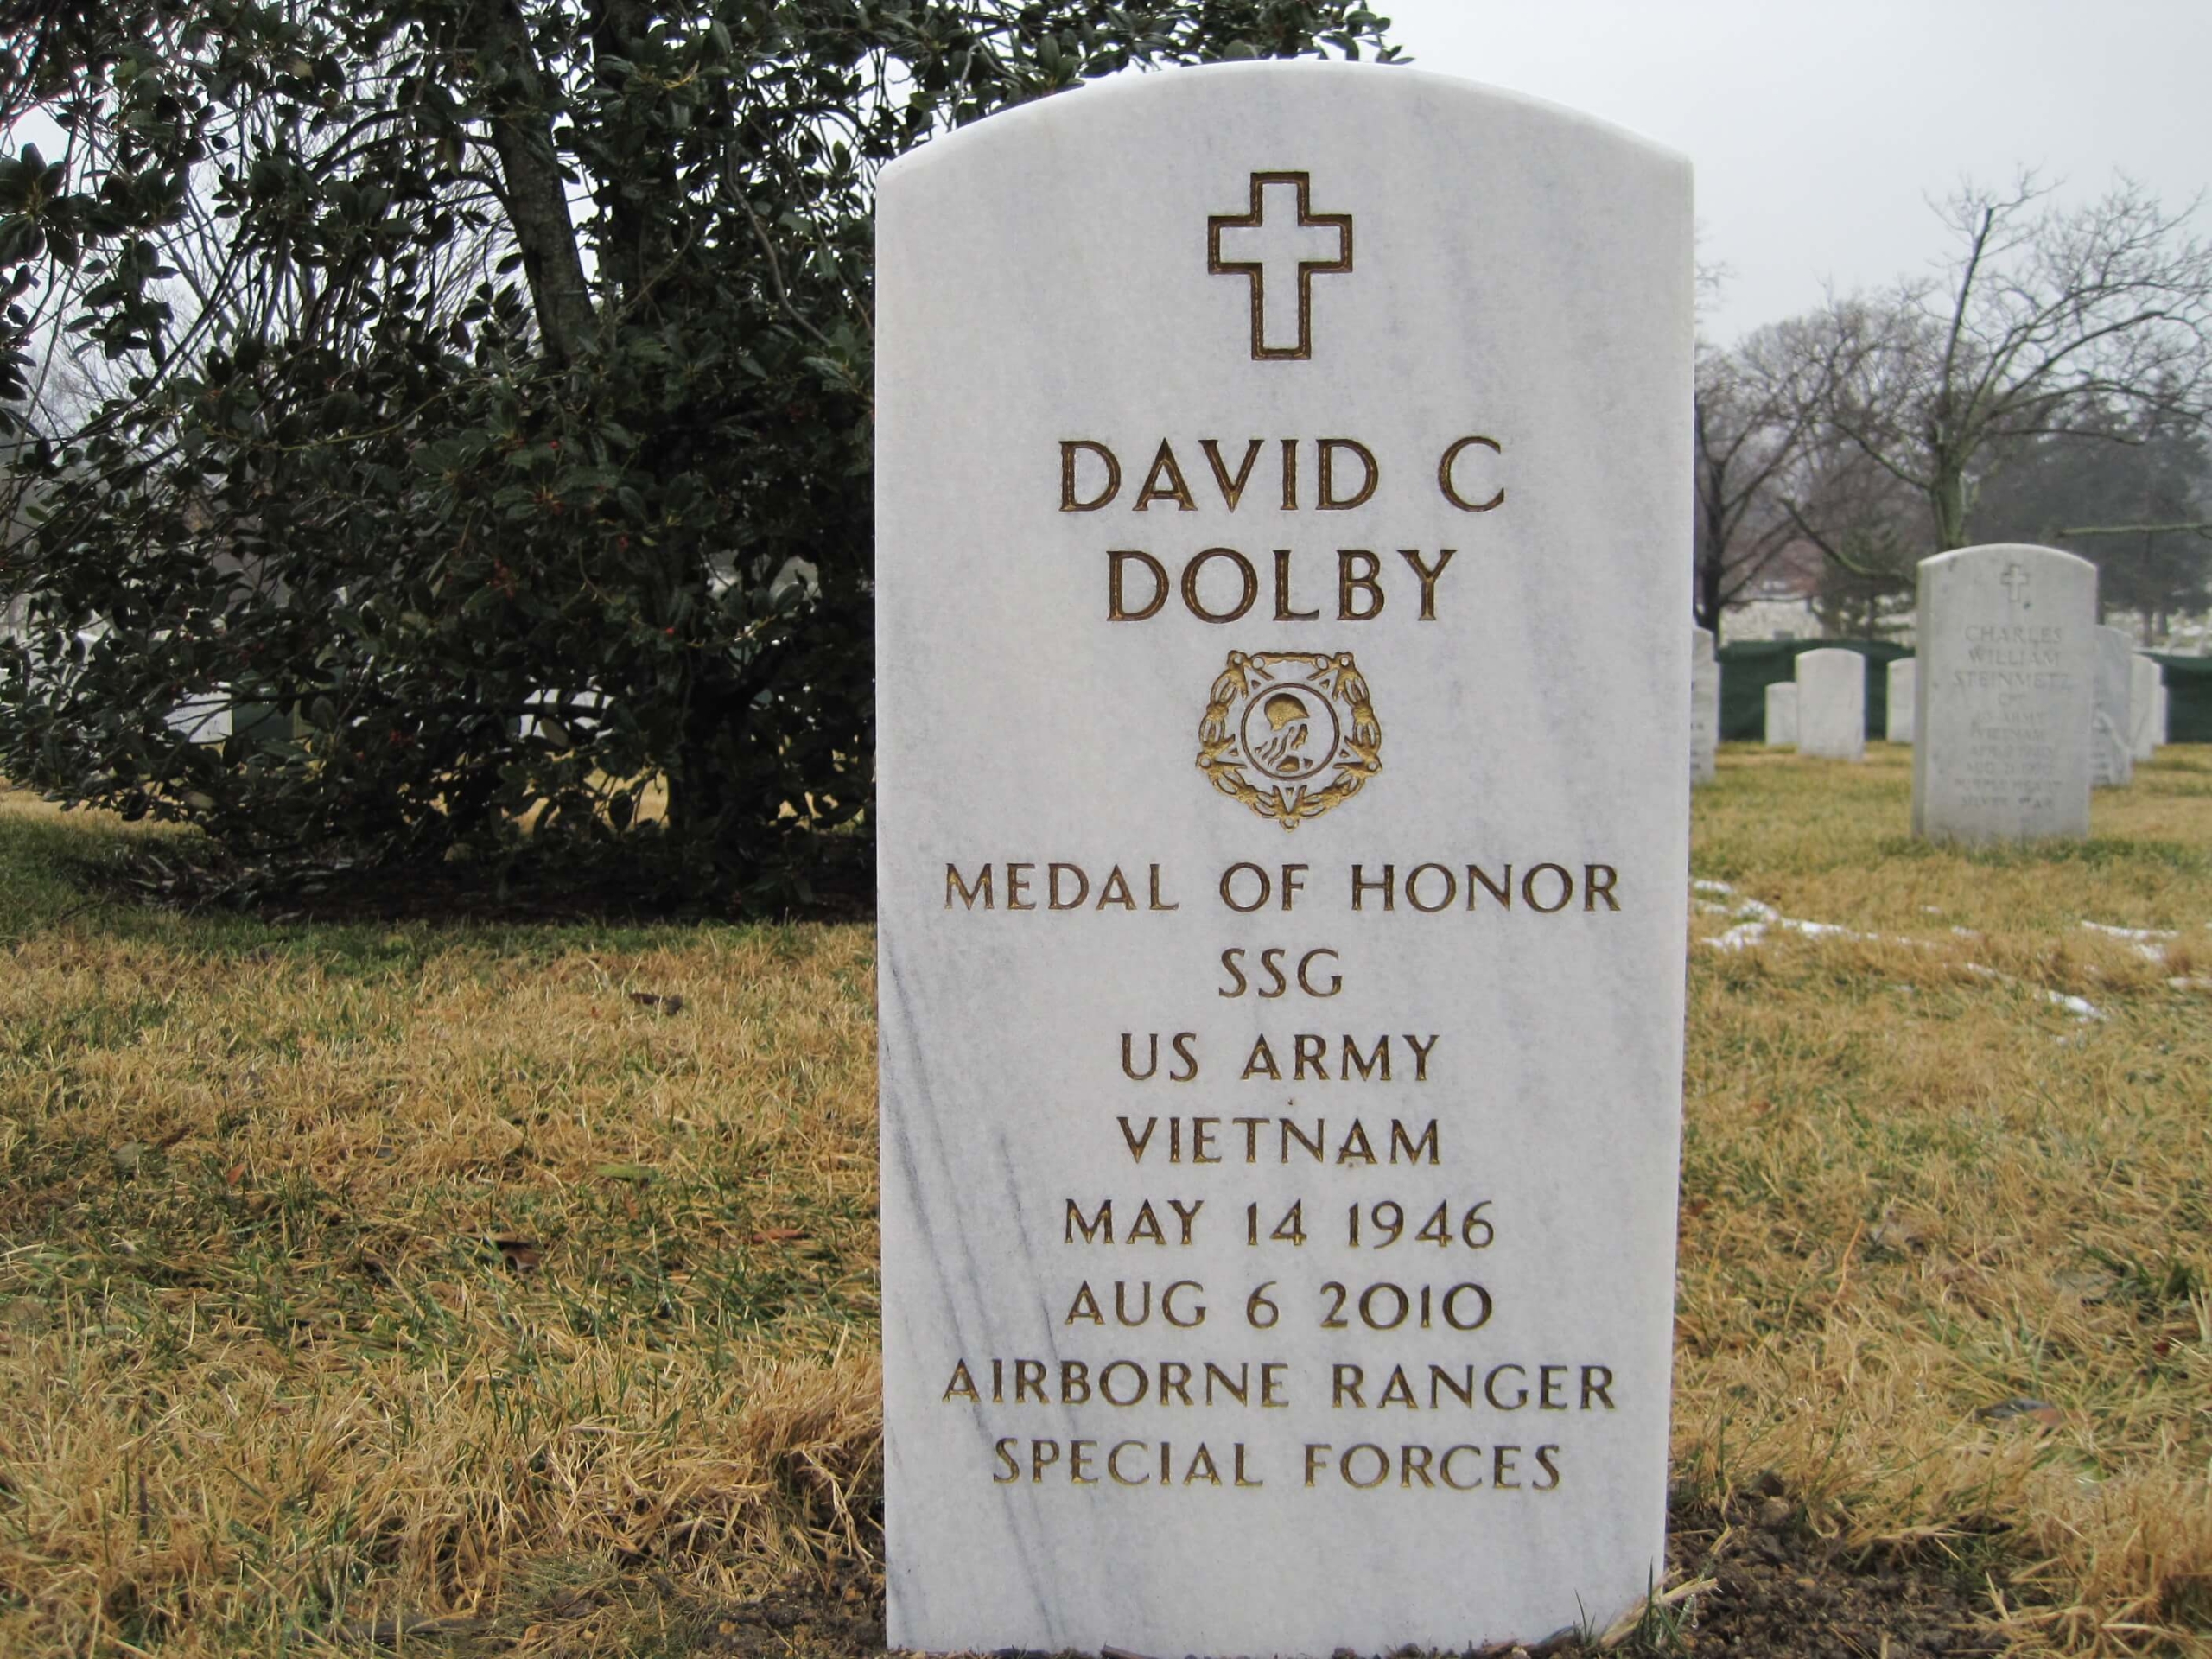 dcdolby-gravesite-photo-by-eileen-horan-february-2011-001